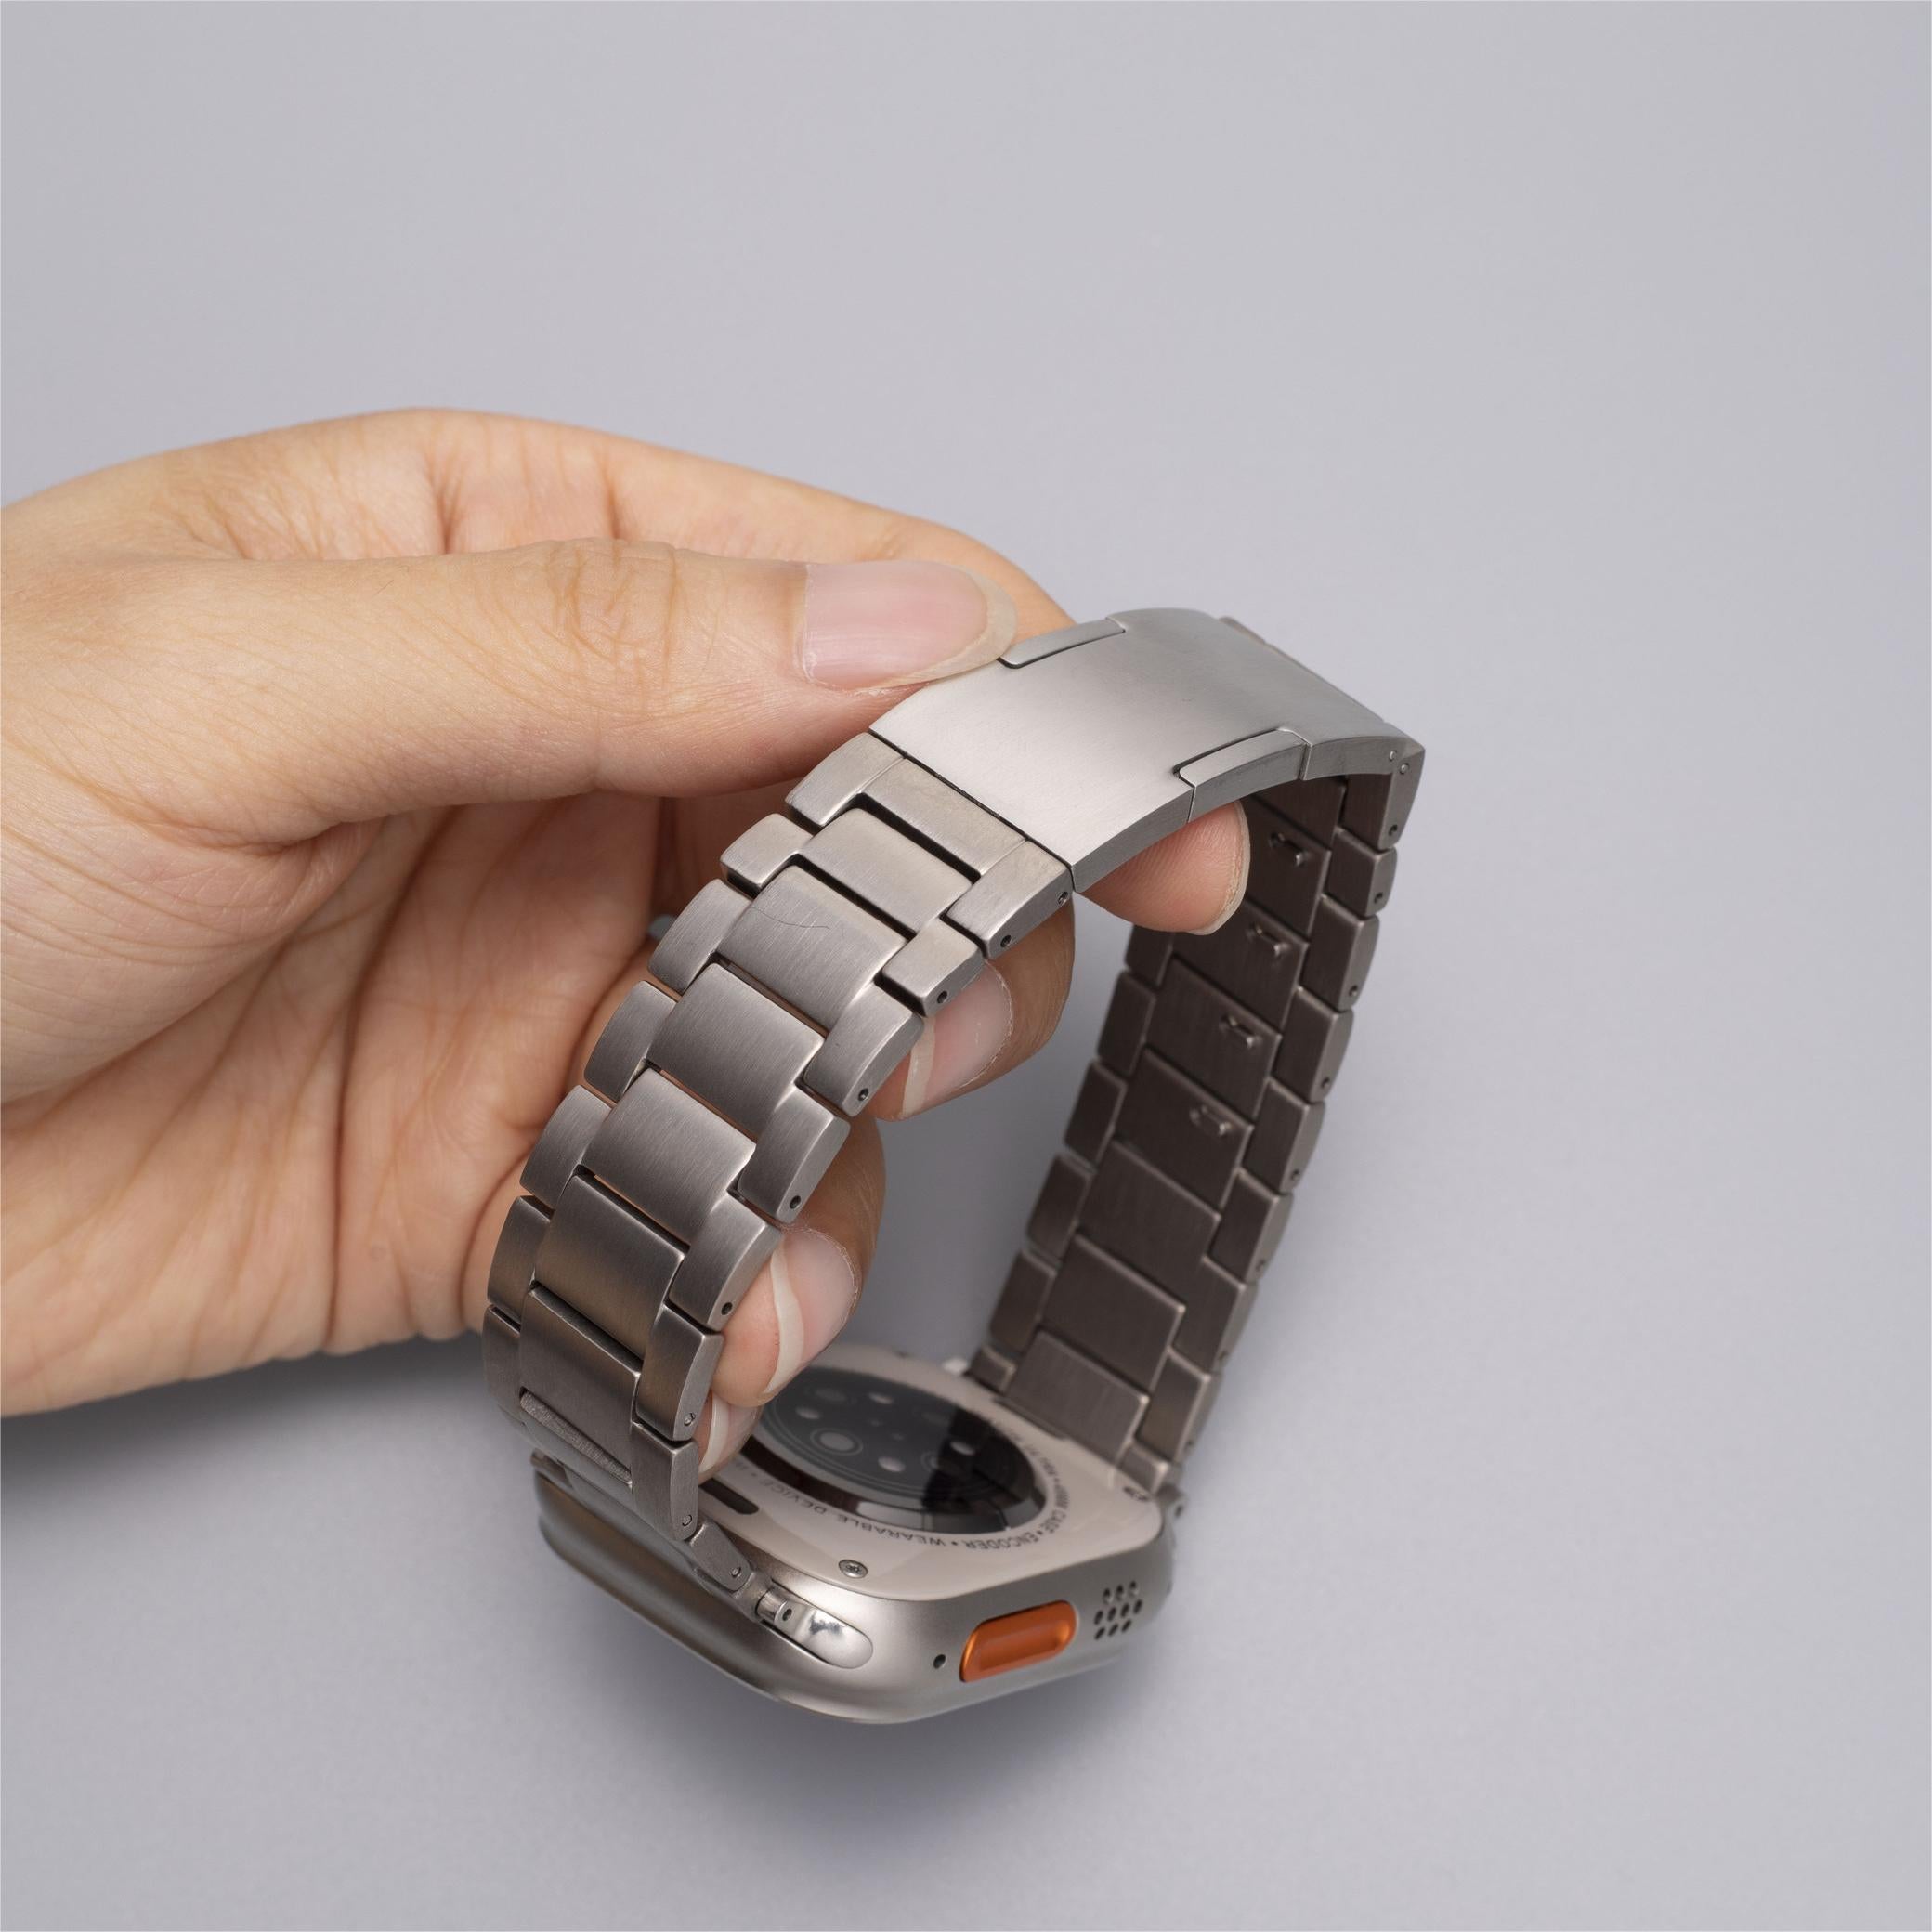 Titanium Link Bracelet Band for Apple Watch